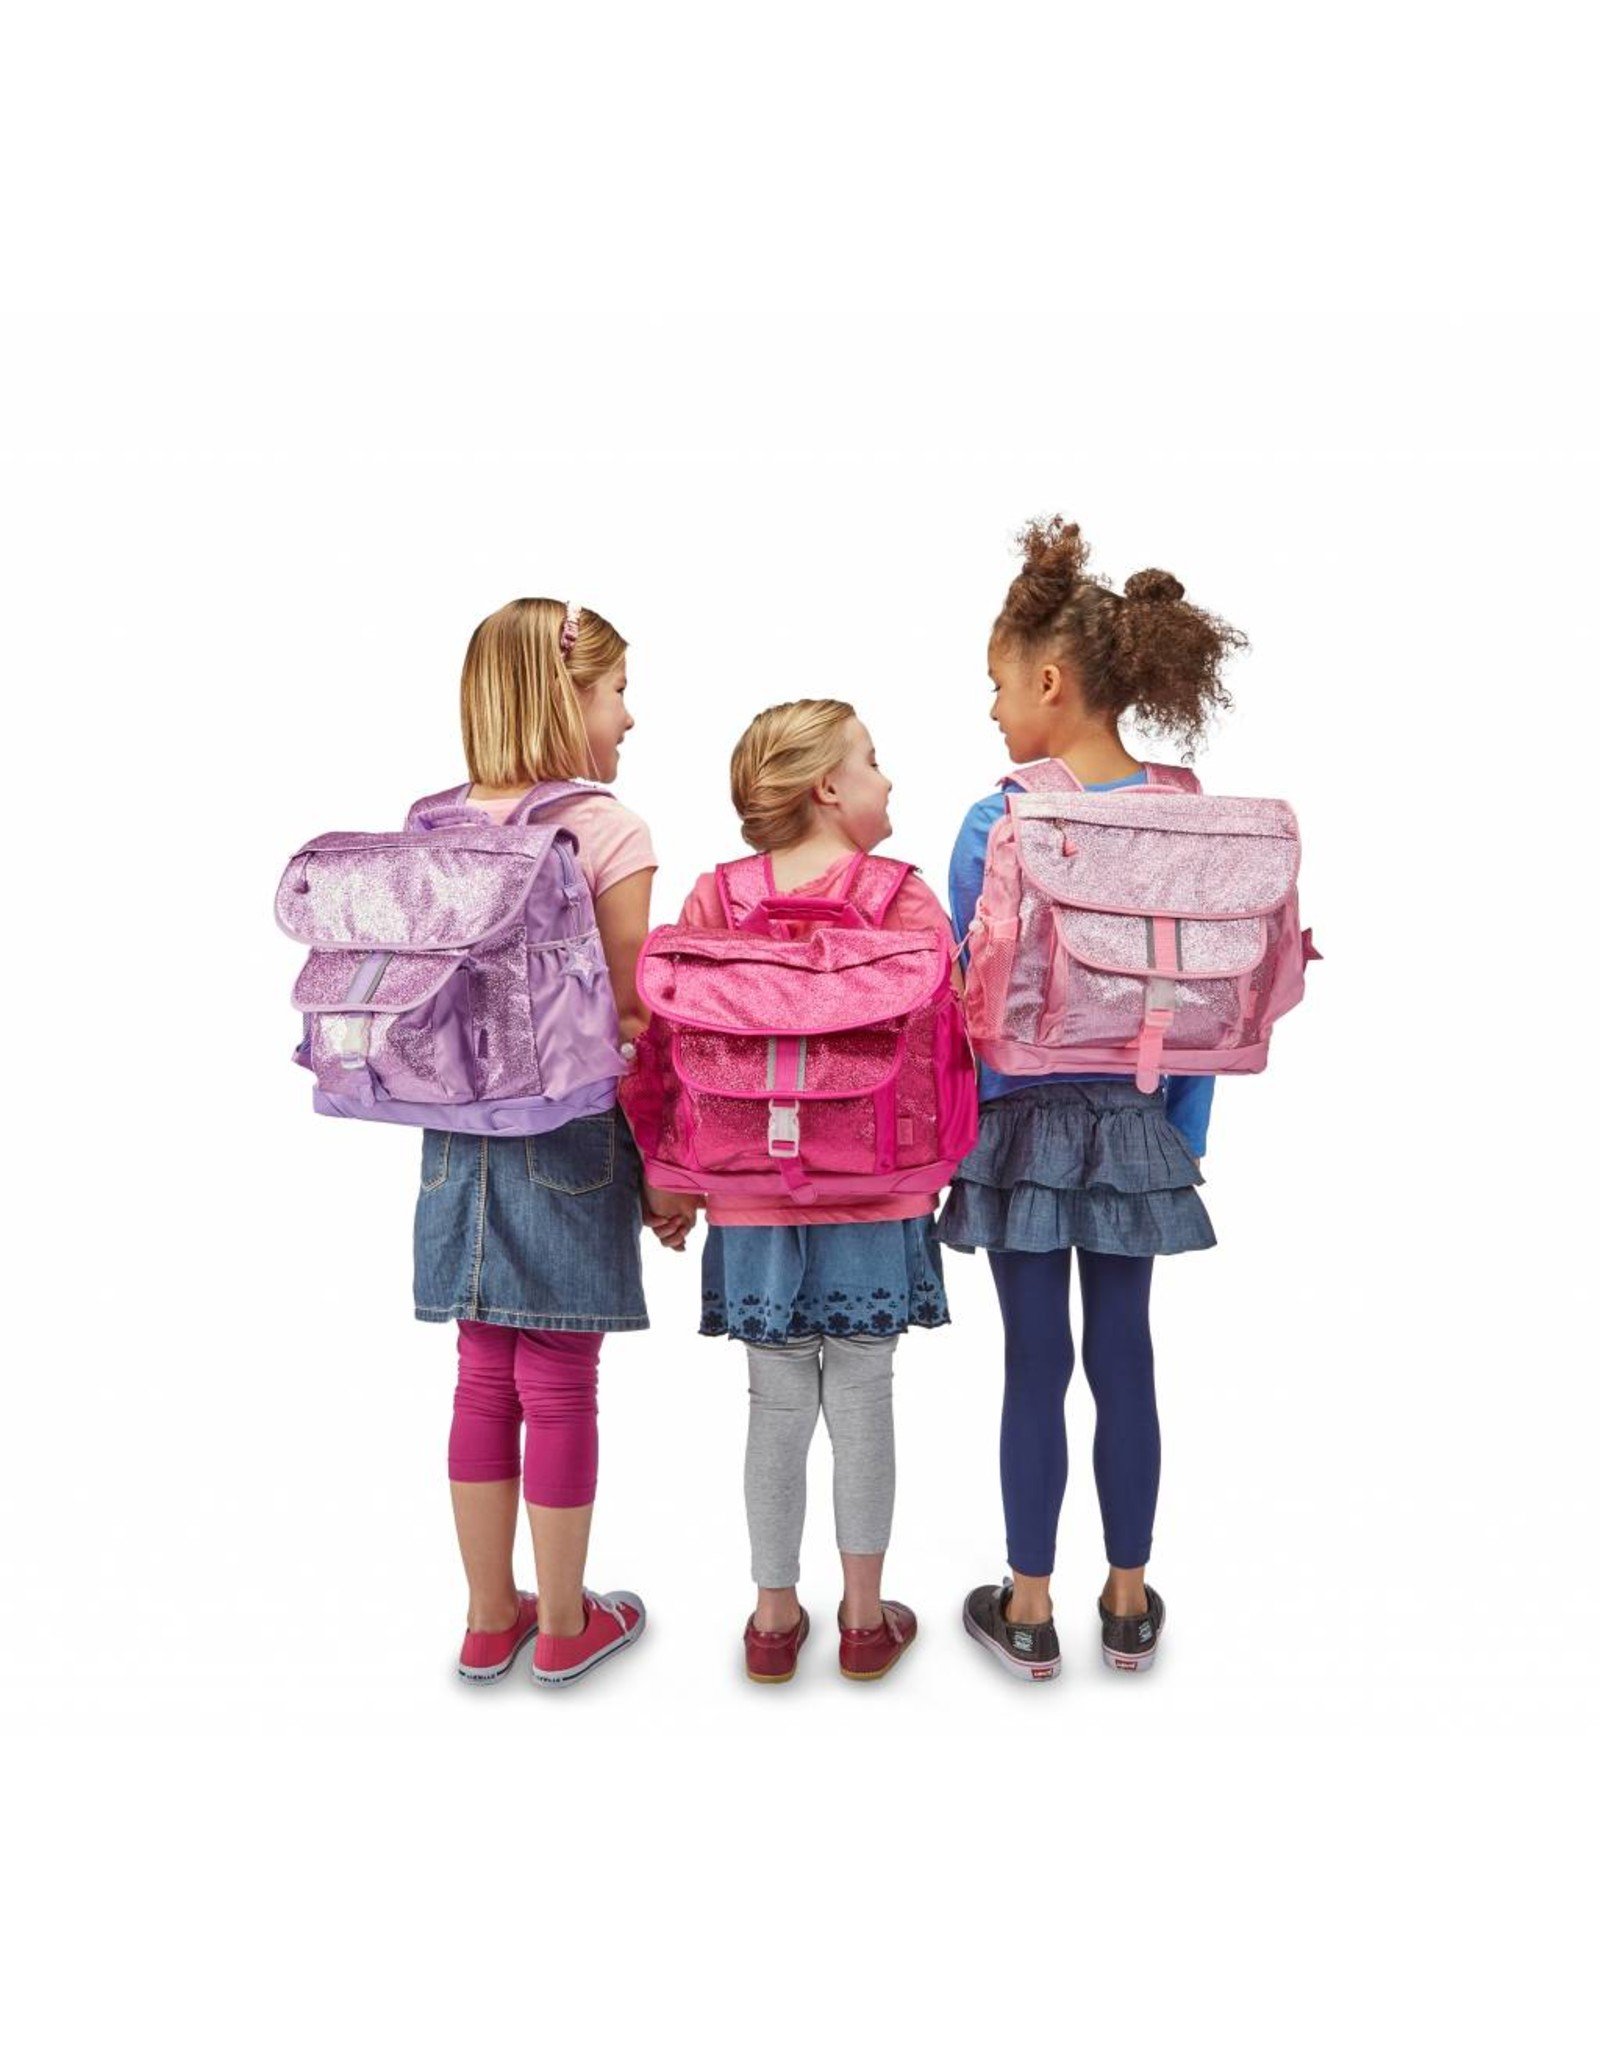 Bixbee Sparkalicious Backpack Medium (Raspberry)